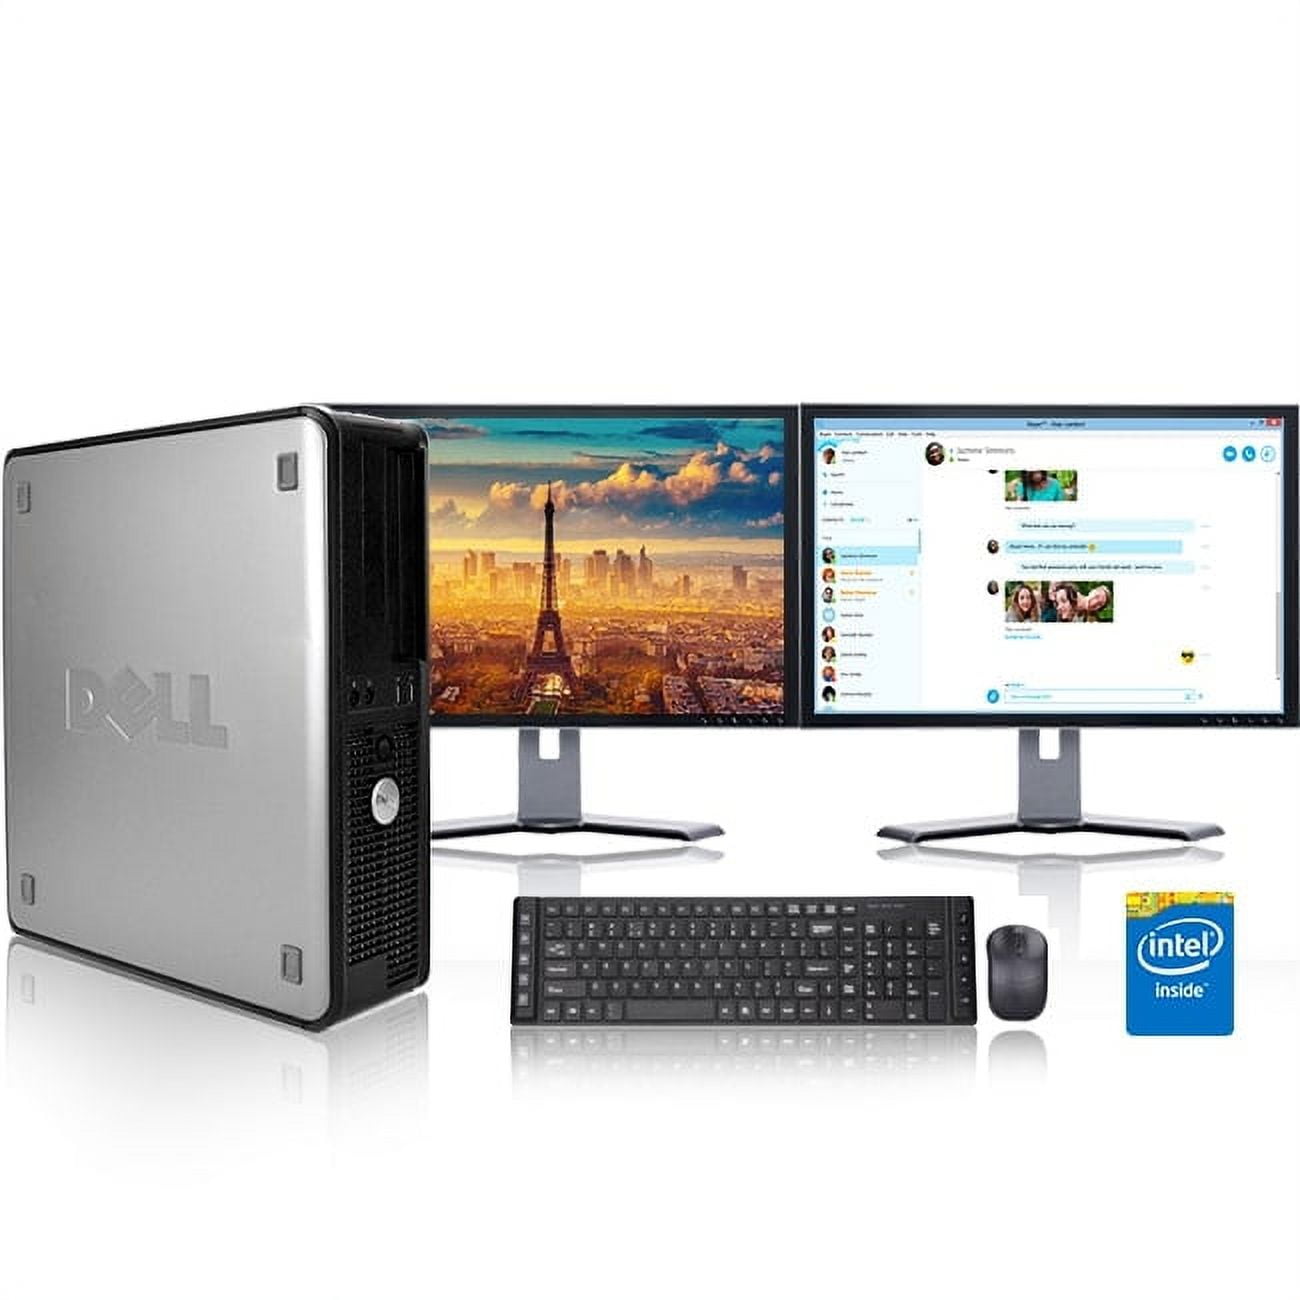 Dell Optiplex 790 SFF Desktop PC with Intel Core i5 Processor, 4GB Memory,  1TB Hard Drive and Windows 10 ProMonitor Not Included